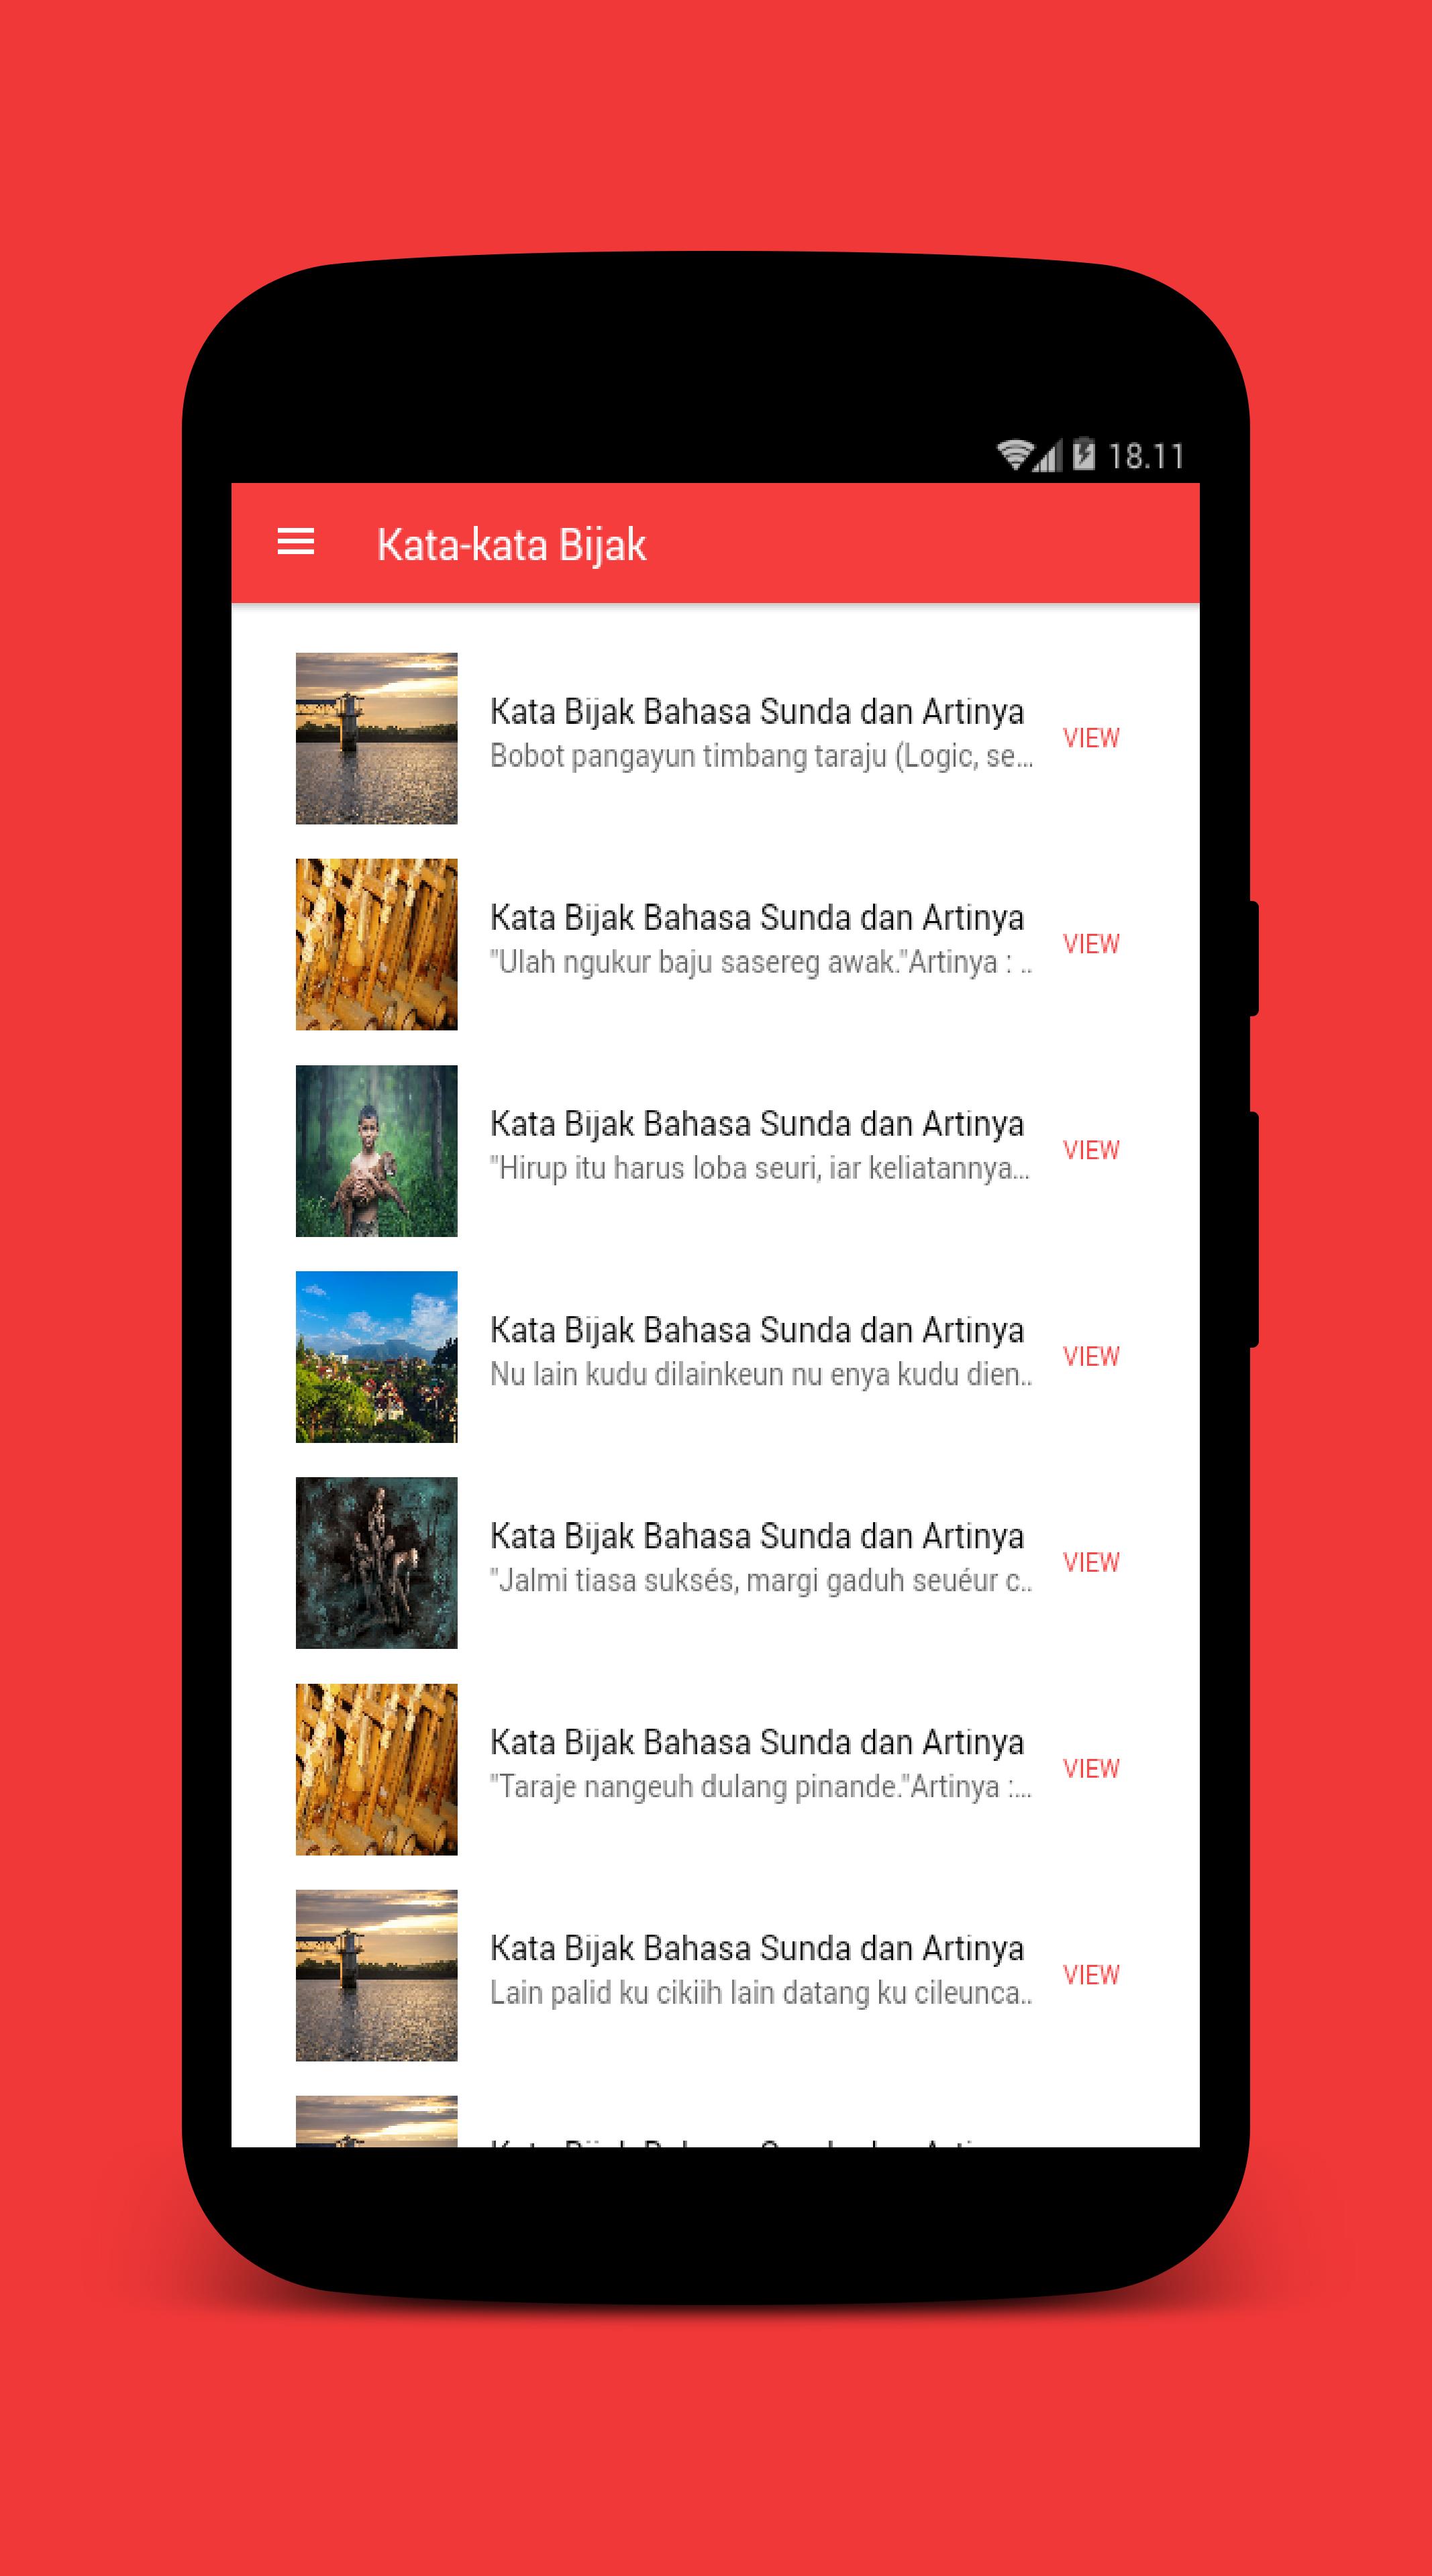 Kata Bijak Bahasa Sunda For Android Apk Download